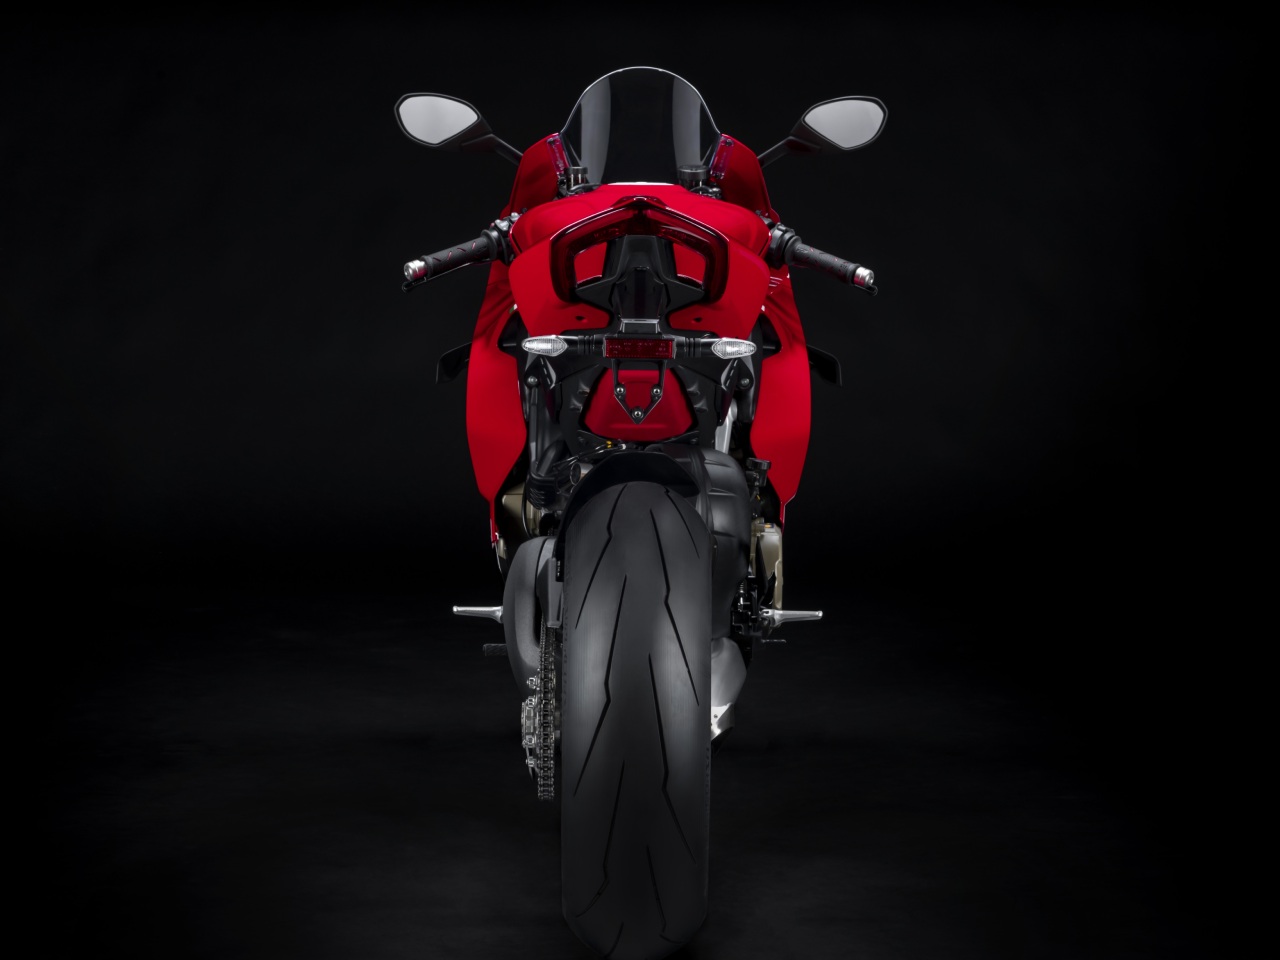 DucatiPanigale V4 S 2023 - traseira